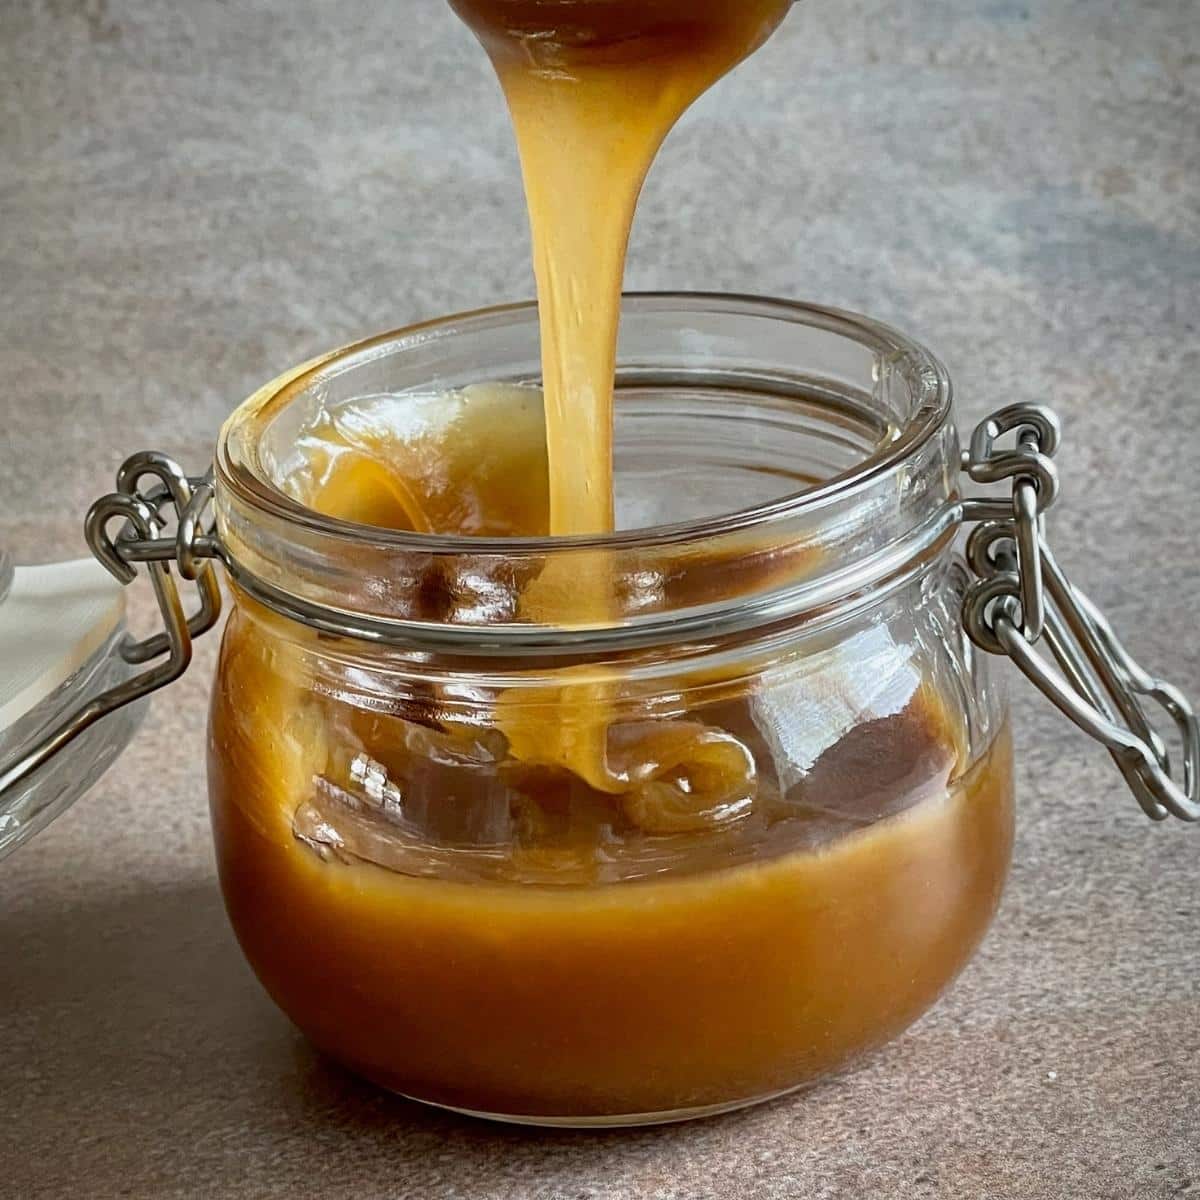 Vegan butterscotch sauce being poured into a jar.